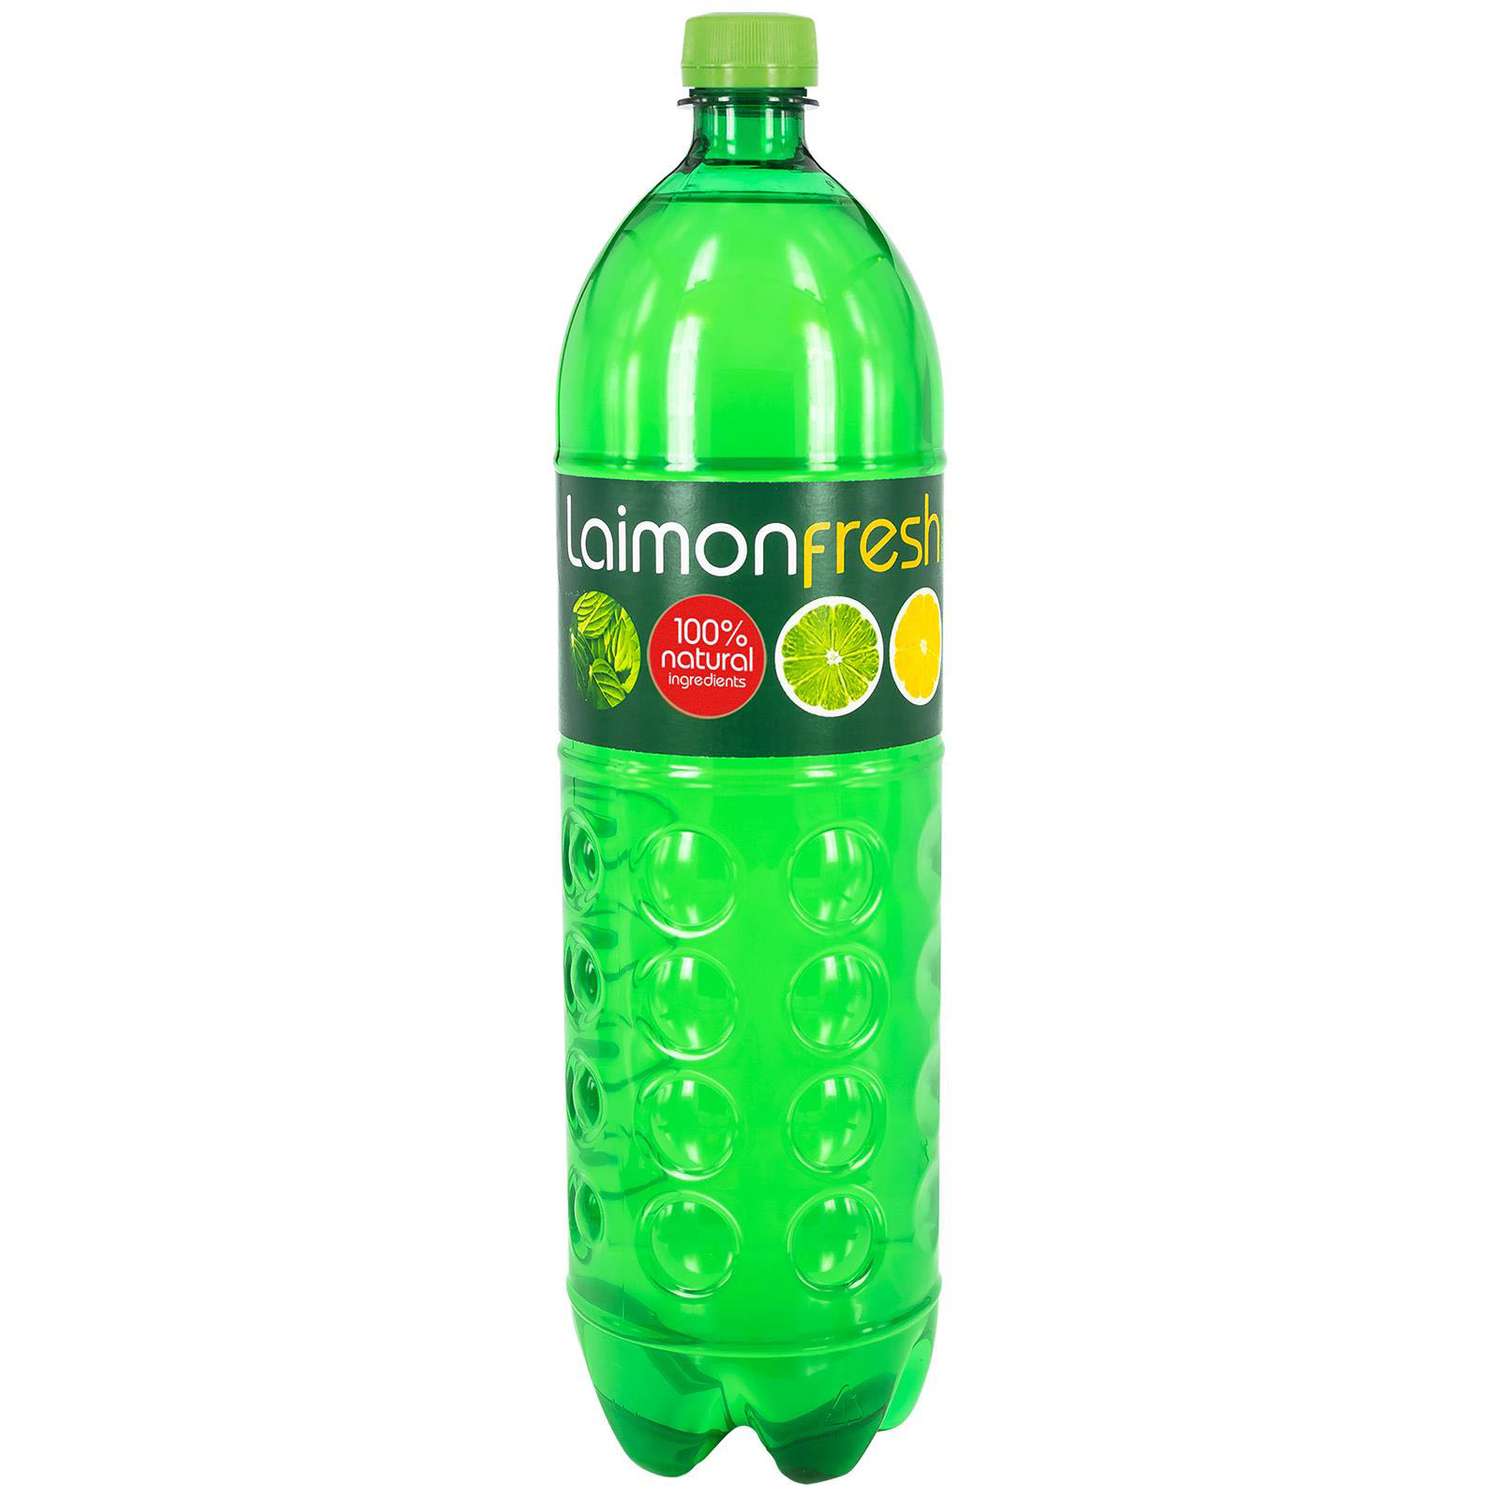 Напиток Laimon fresh макс газированный 1.5 л - фото 1